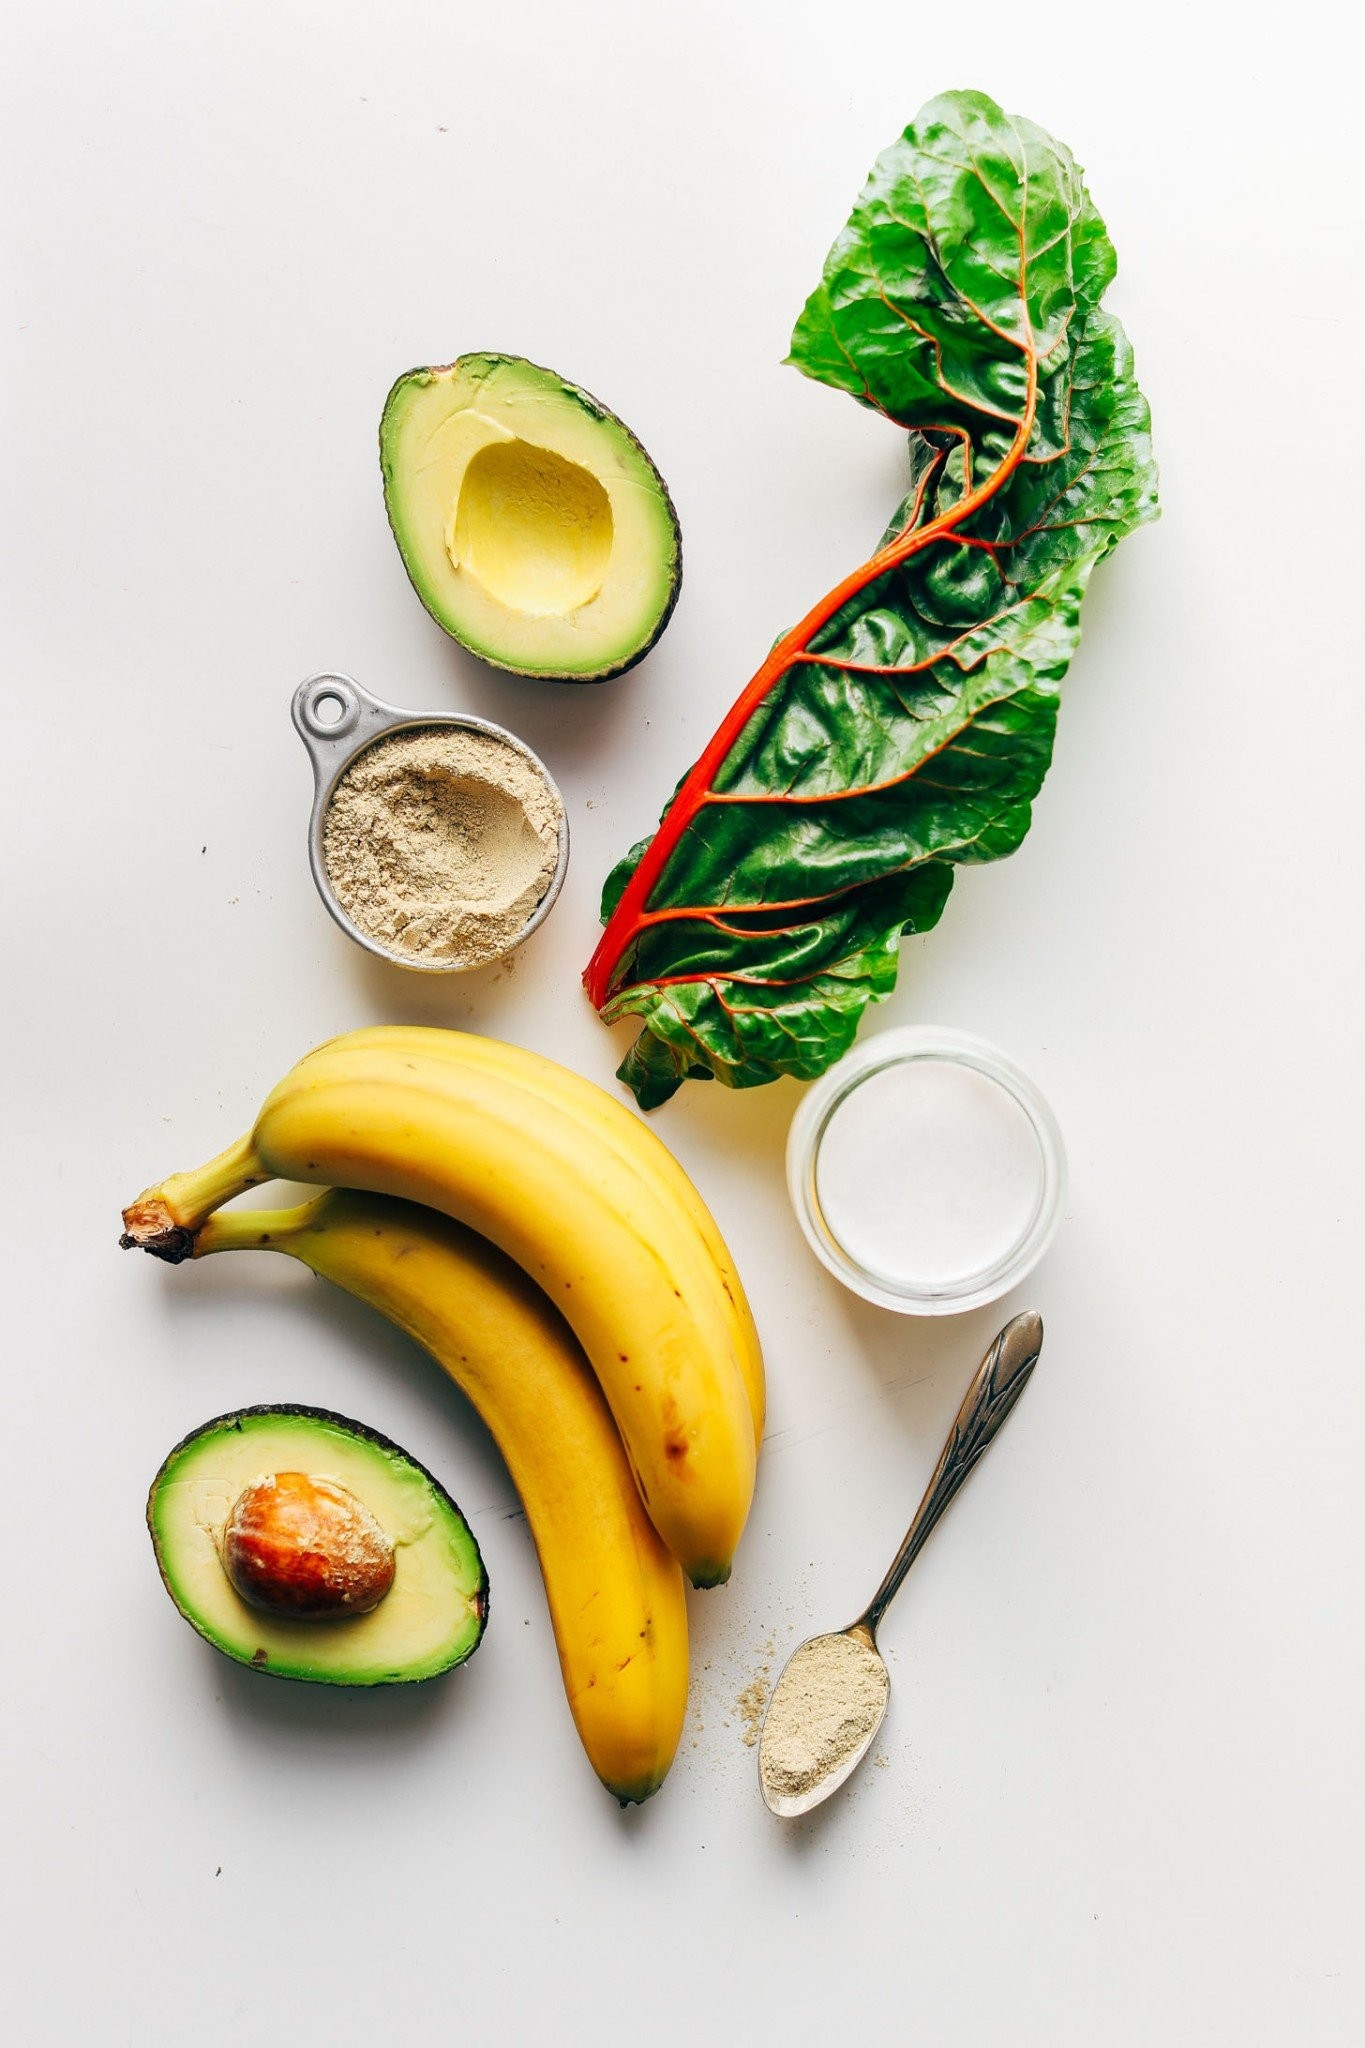 creamy-avocado-green-smoothie-5-ingredients-green-so-healthy-satisfying-vegan-banana-plantbased-smoothie-greensmoothie-avocado-glutenfree-3.jpg